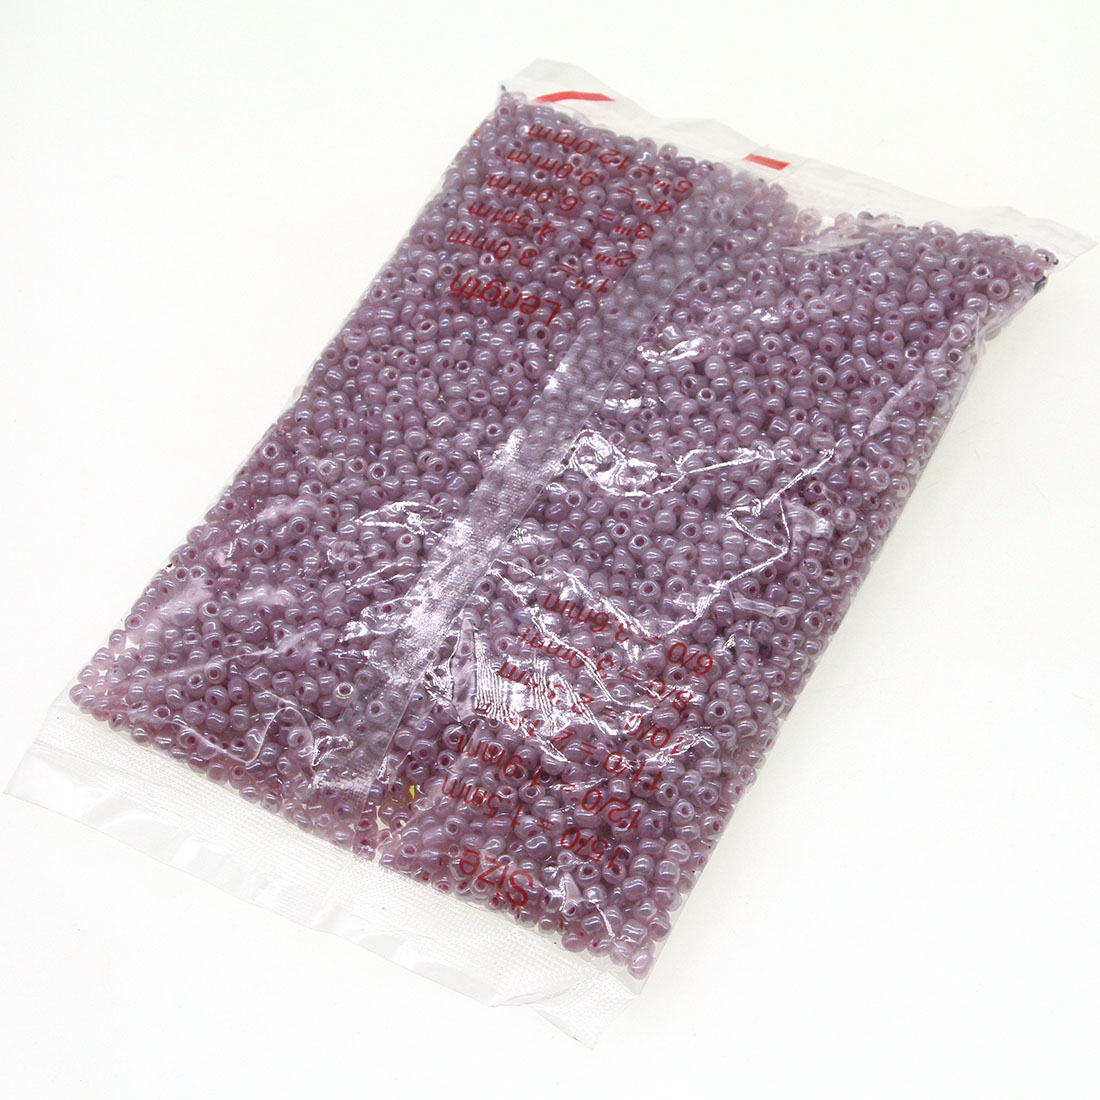 Grape purple 3mm 10,000 packs